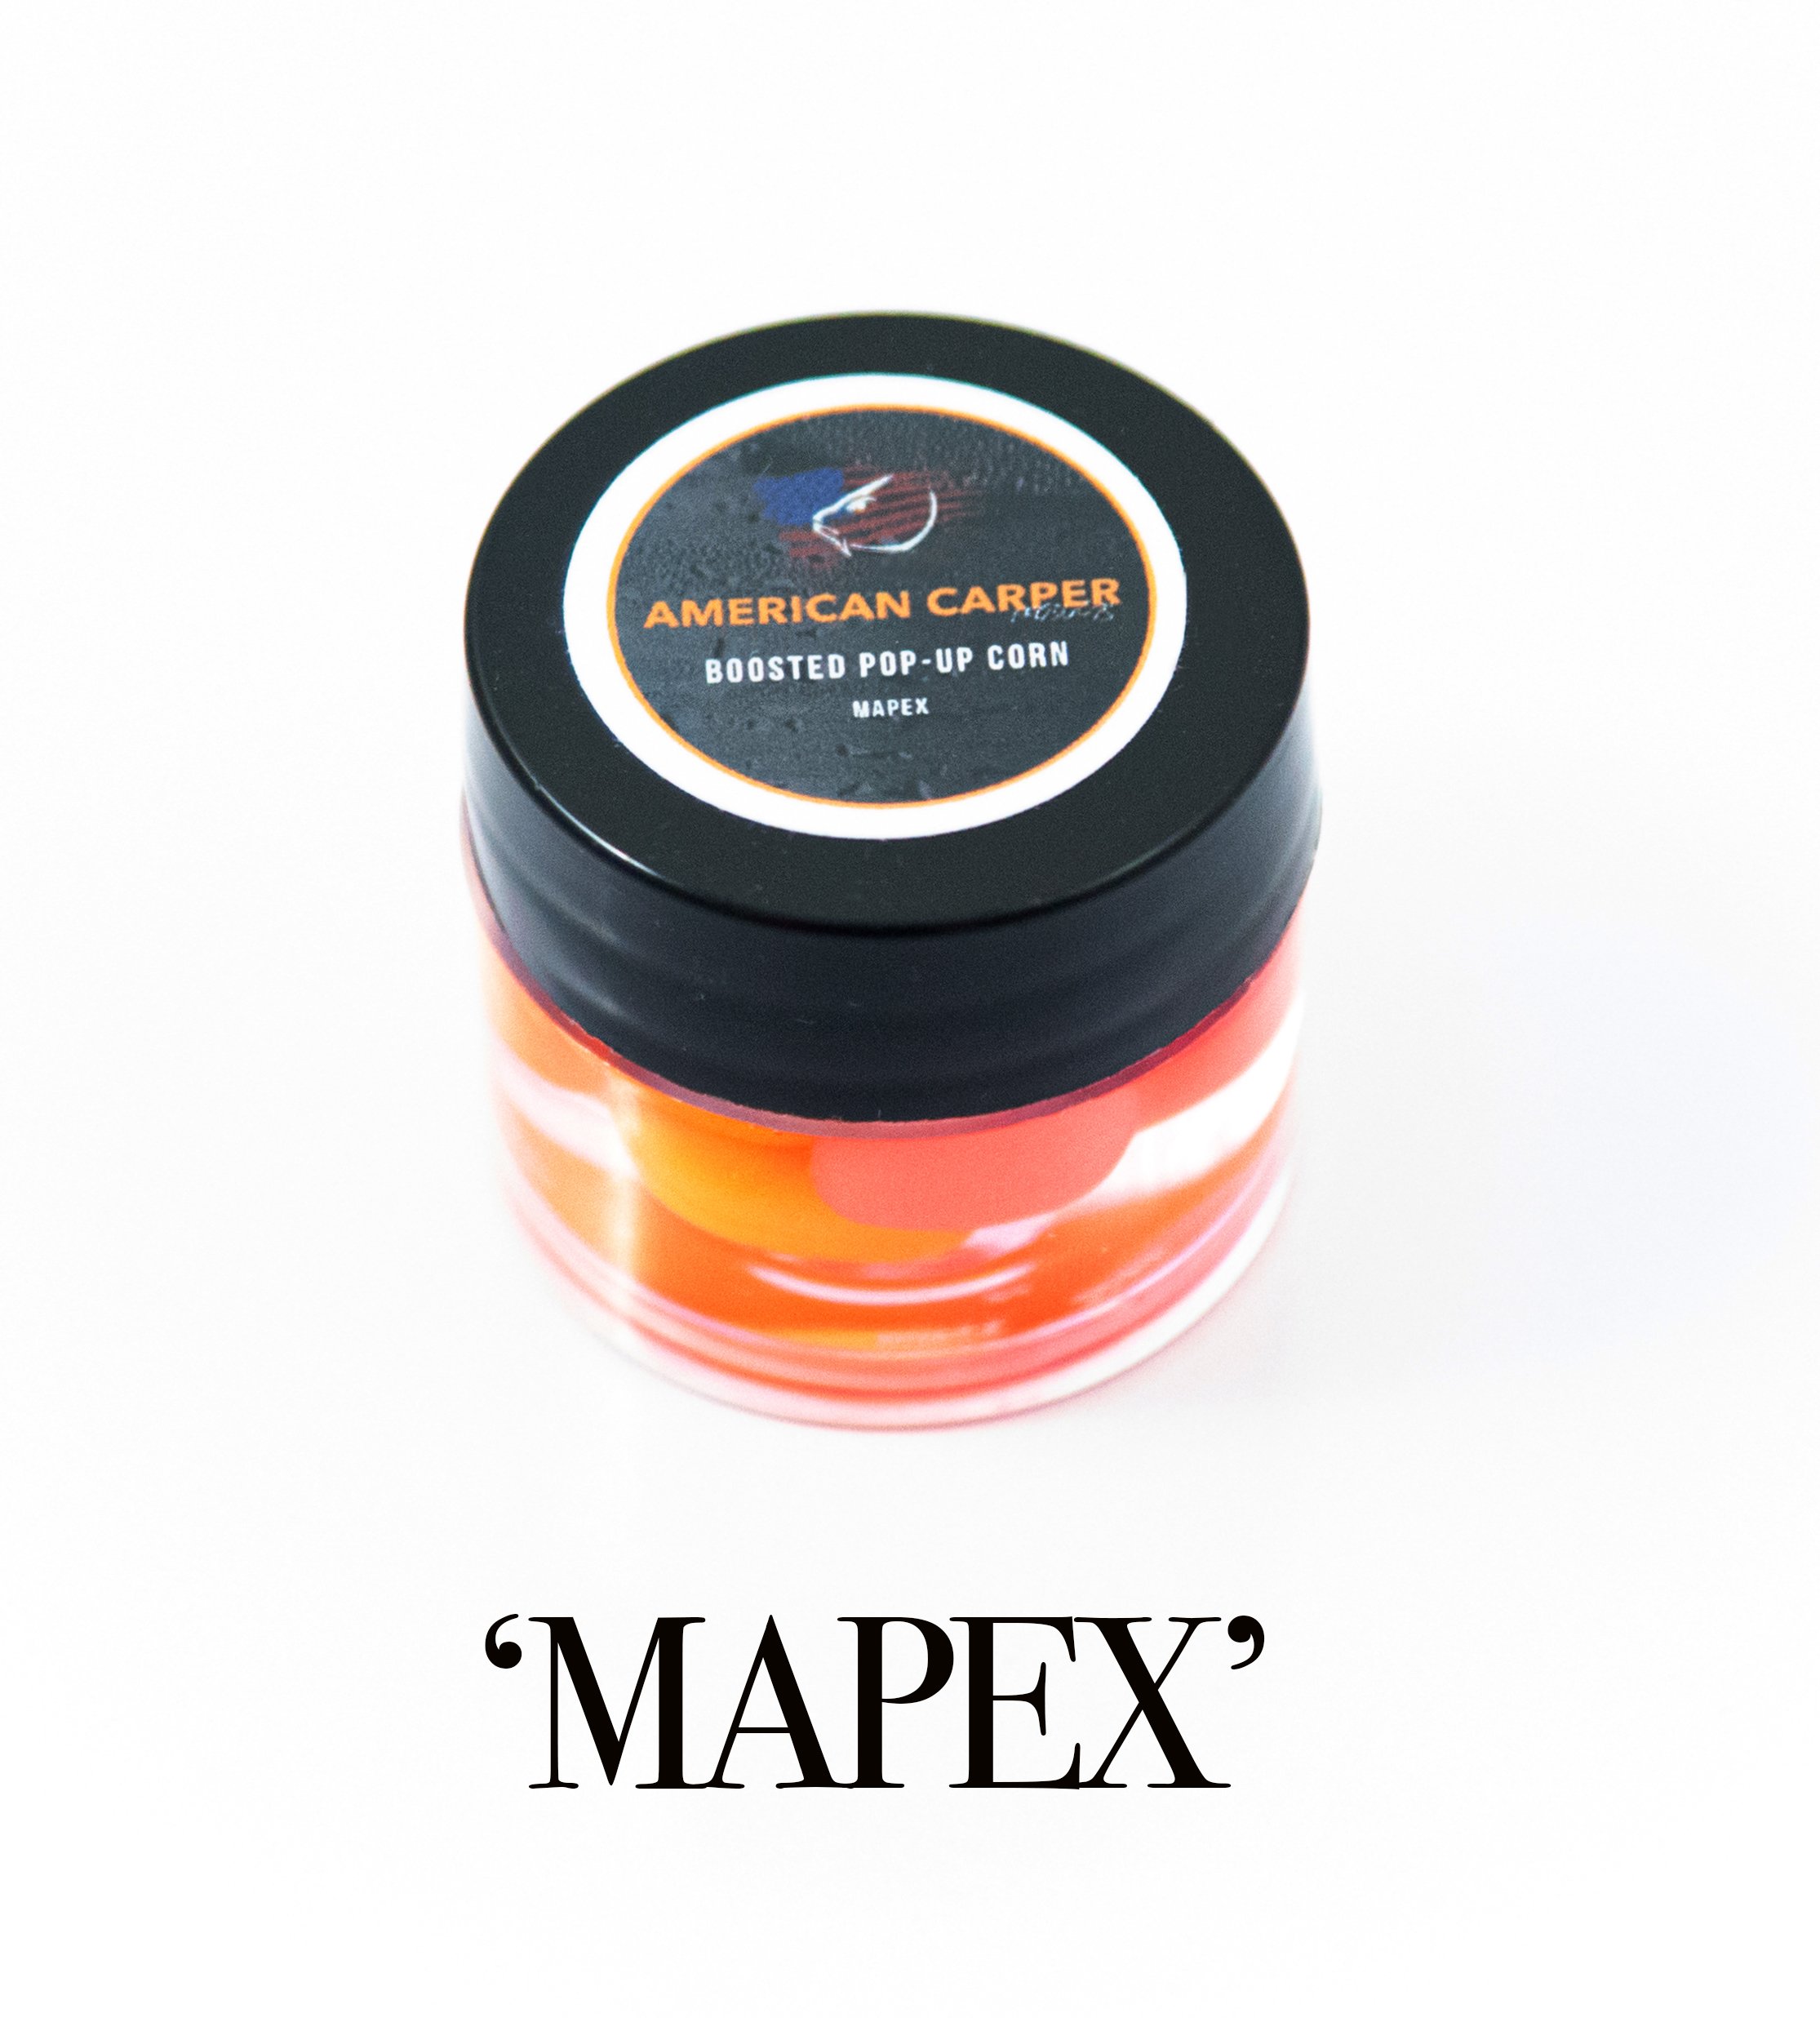 MAPEX copy.jpg